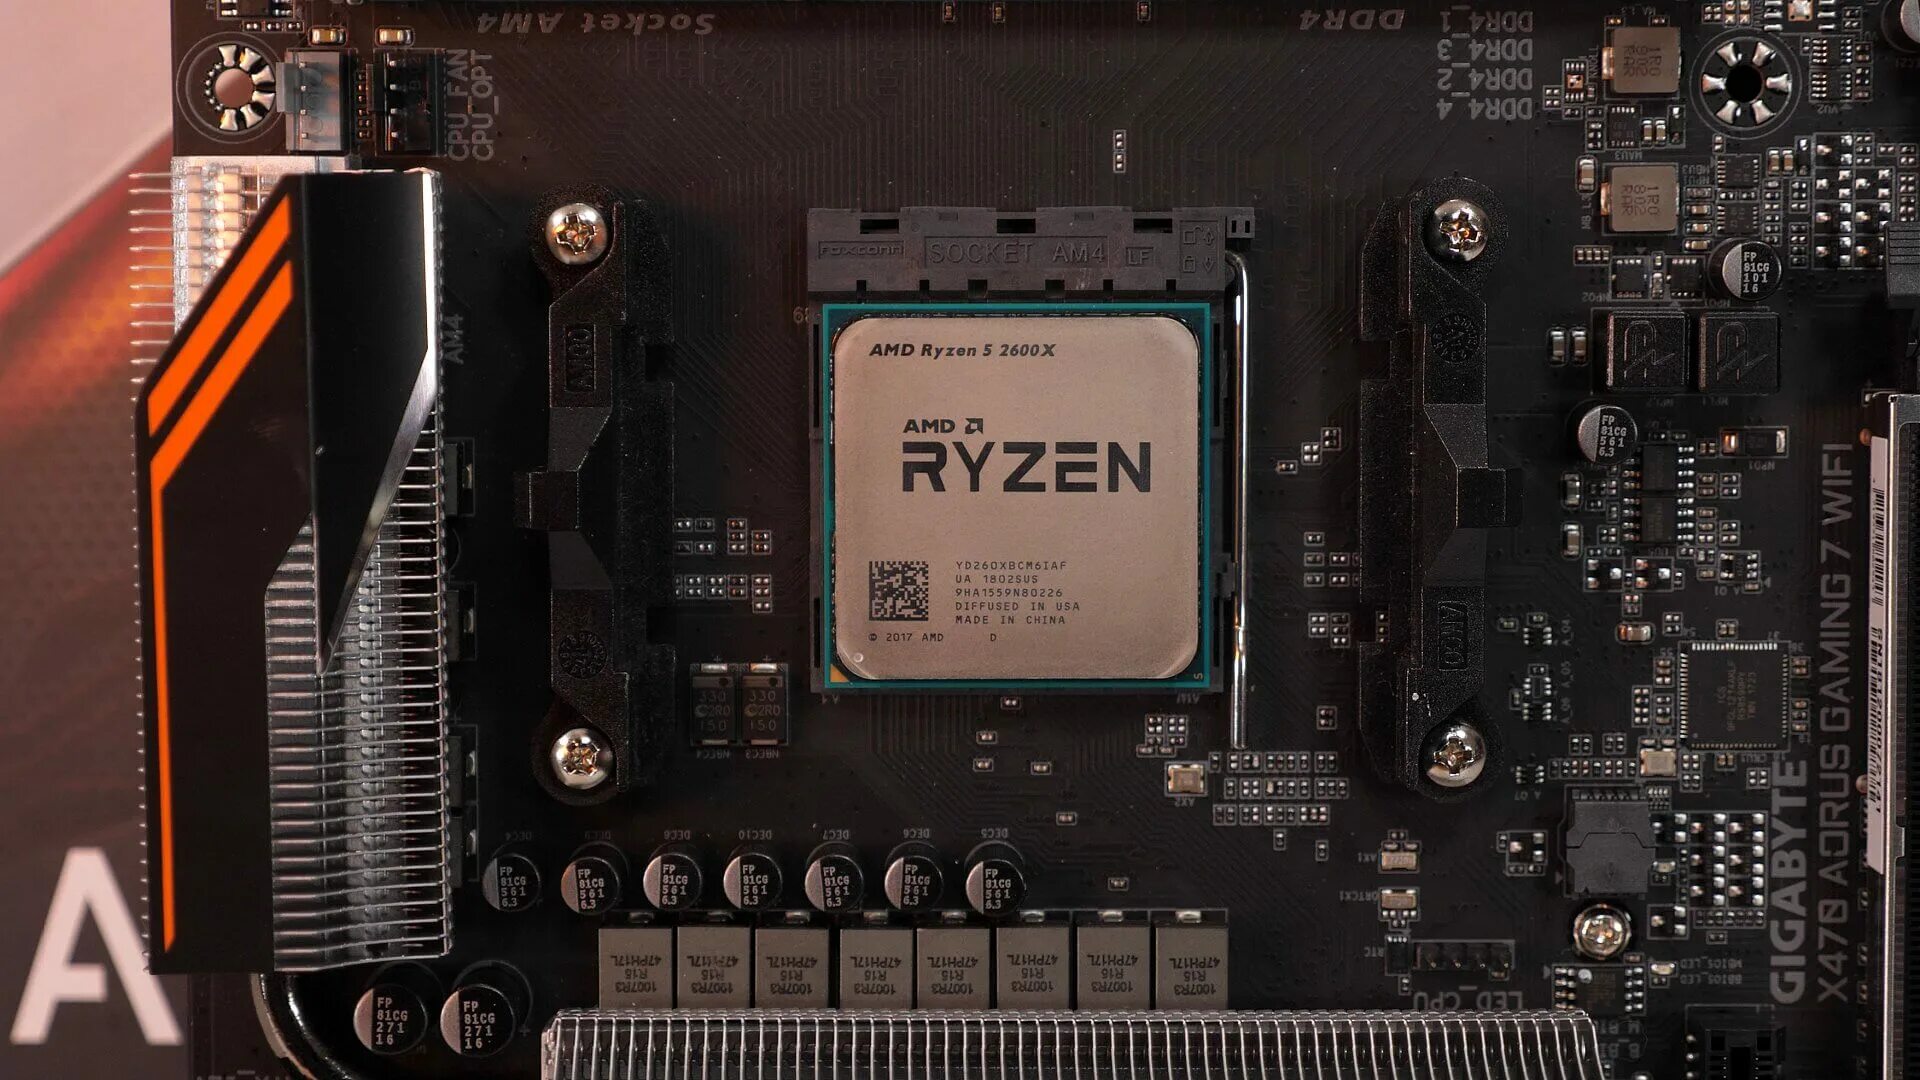 Amd radeon r5 процессоры. Ryzen 7 2700. AMD Ryzen 5 2600x. AMD 5 2600. AMD Ryzen 7 2700x.